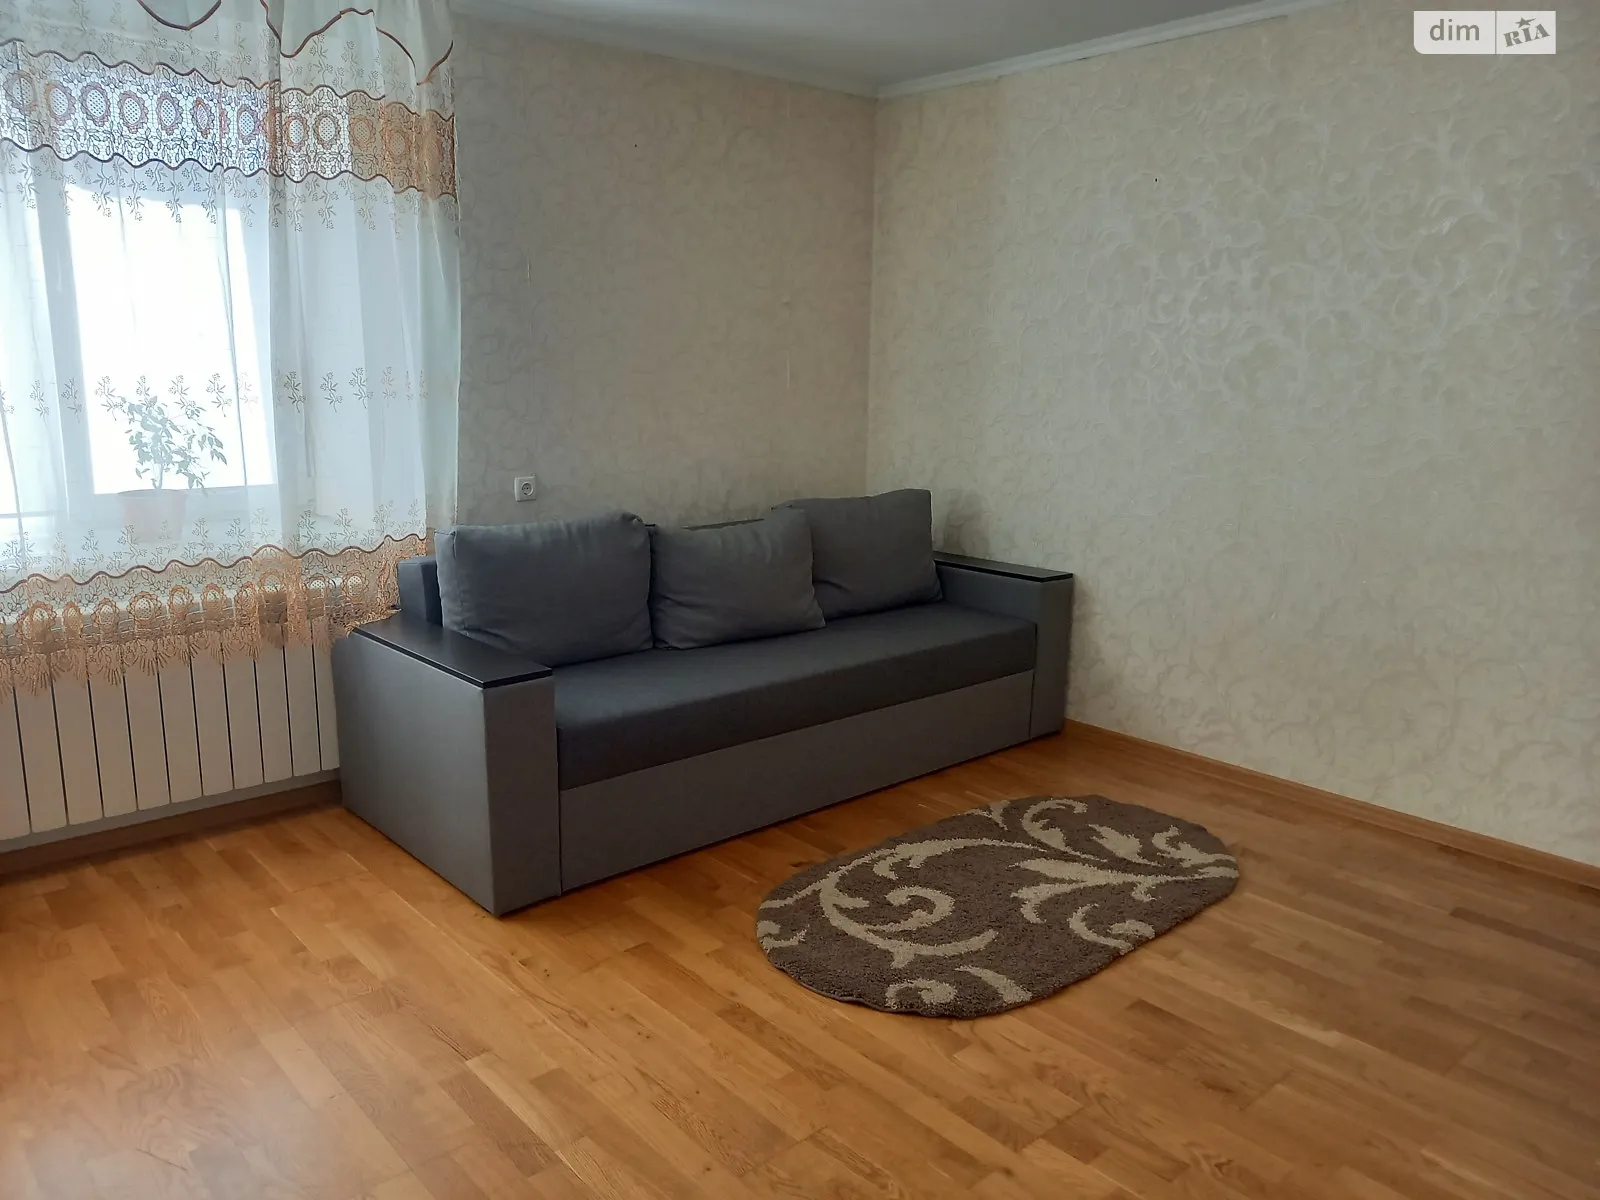 1-кімнатна квартира 43 кв. м у Тернополі, вул. Протасевича, 2 - фото 2